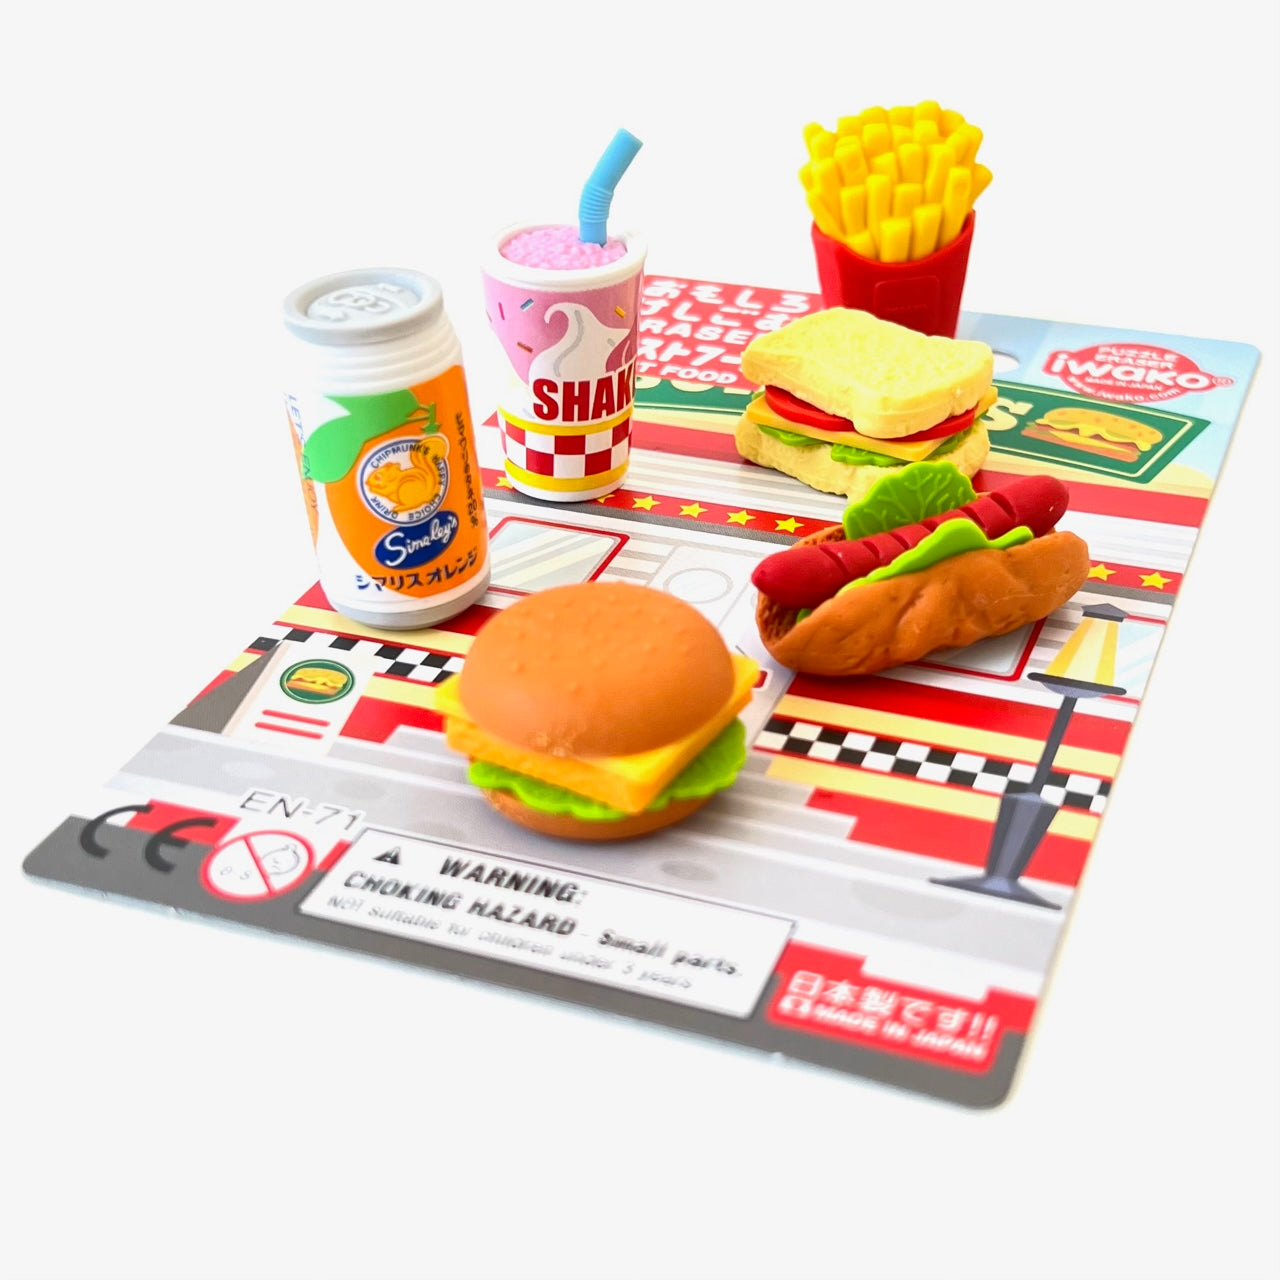 38331 IWAKO FAST FOOD ERASER CARD-10 CARDS